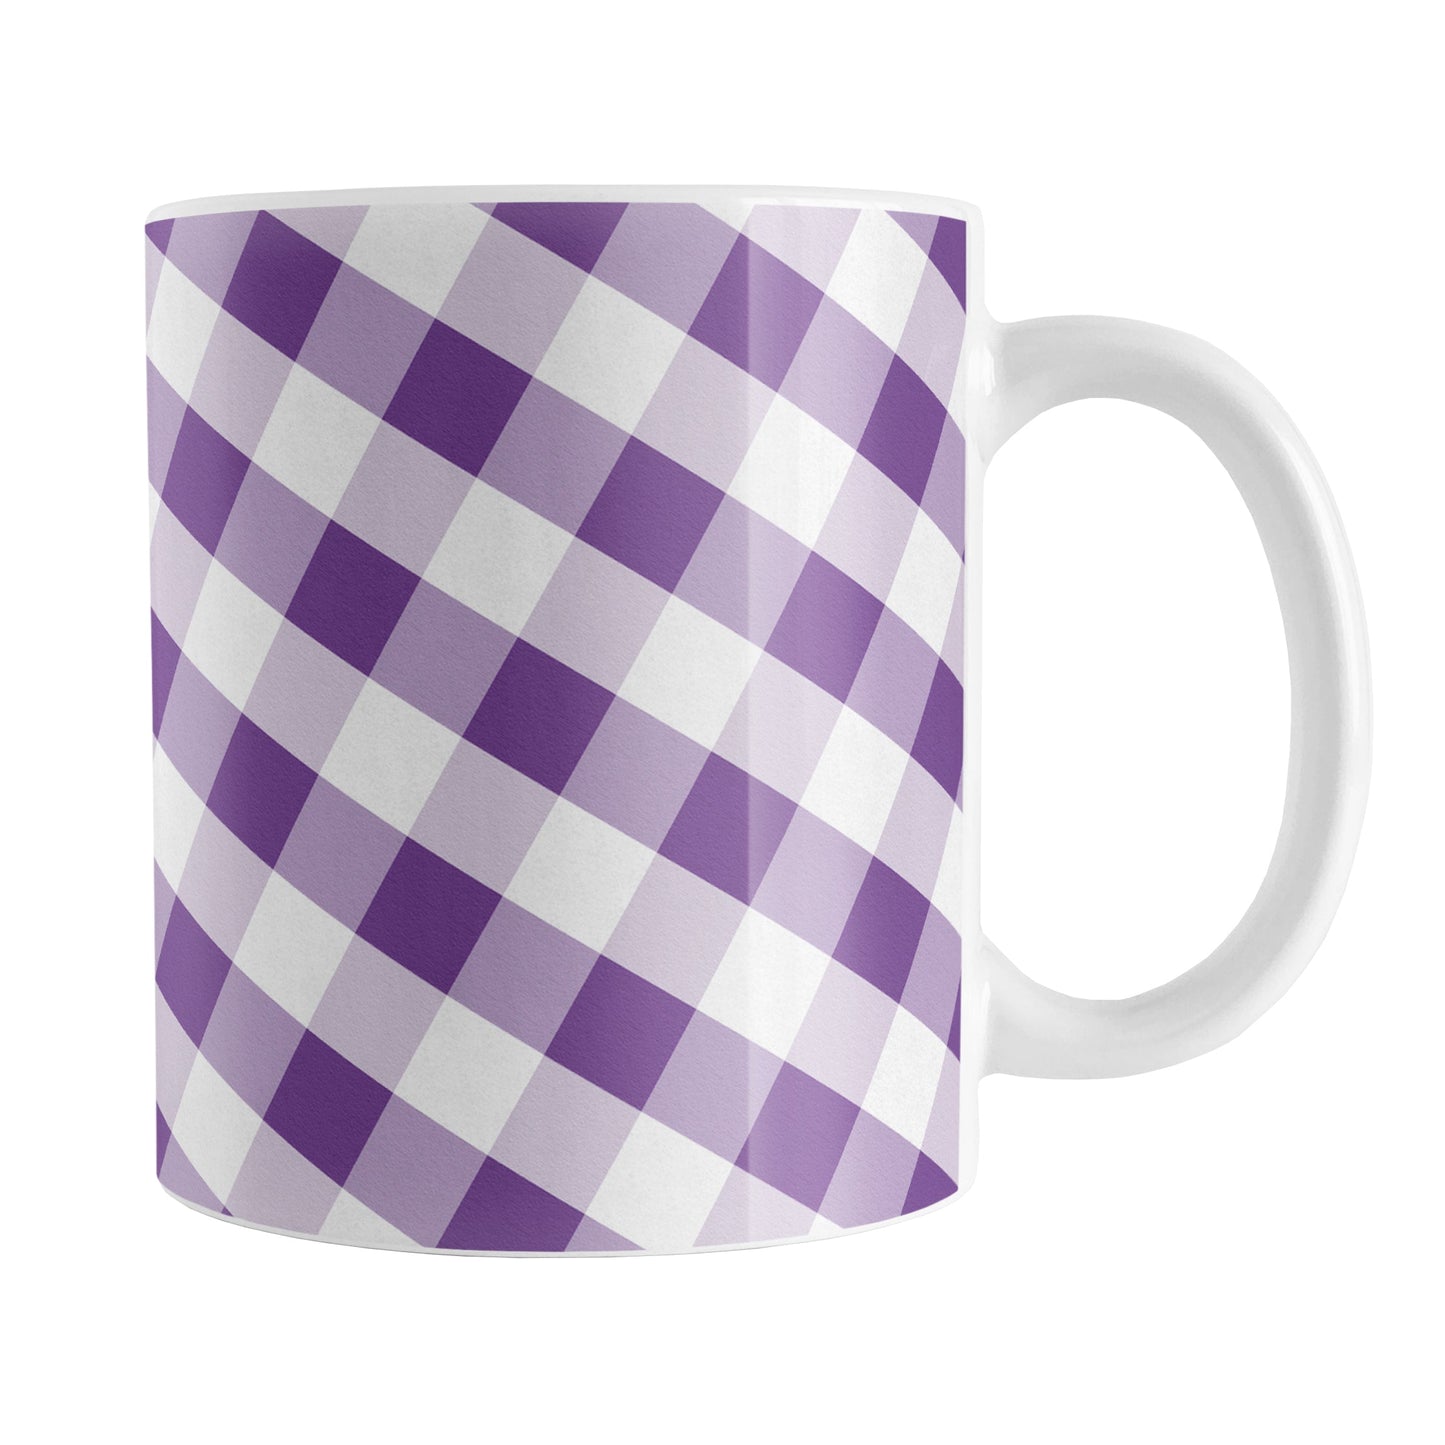 Purple Gingham Mug (11oz) at Amy's Coffee Mugs